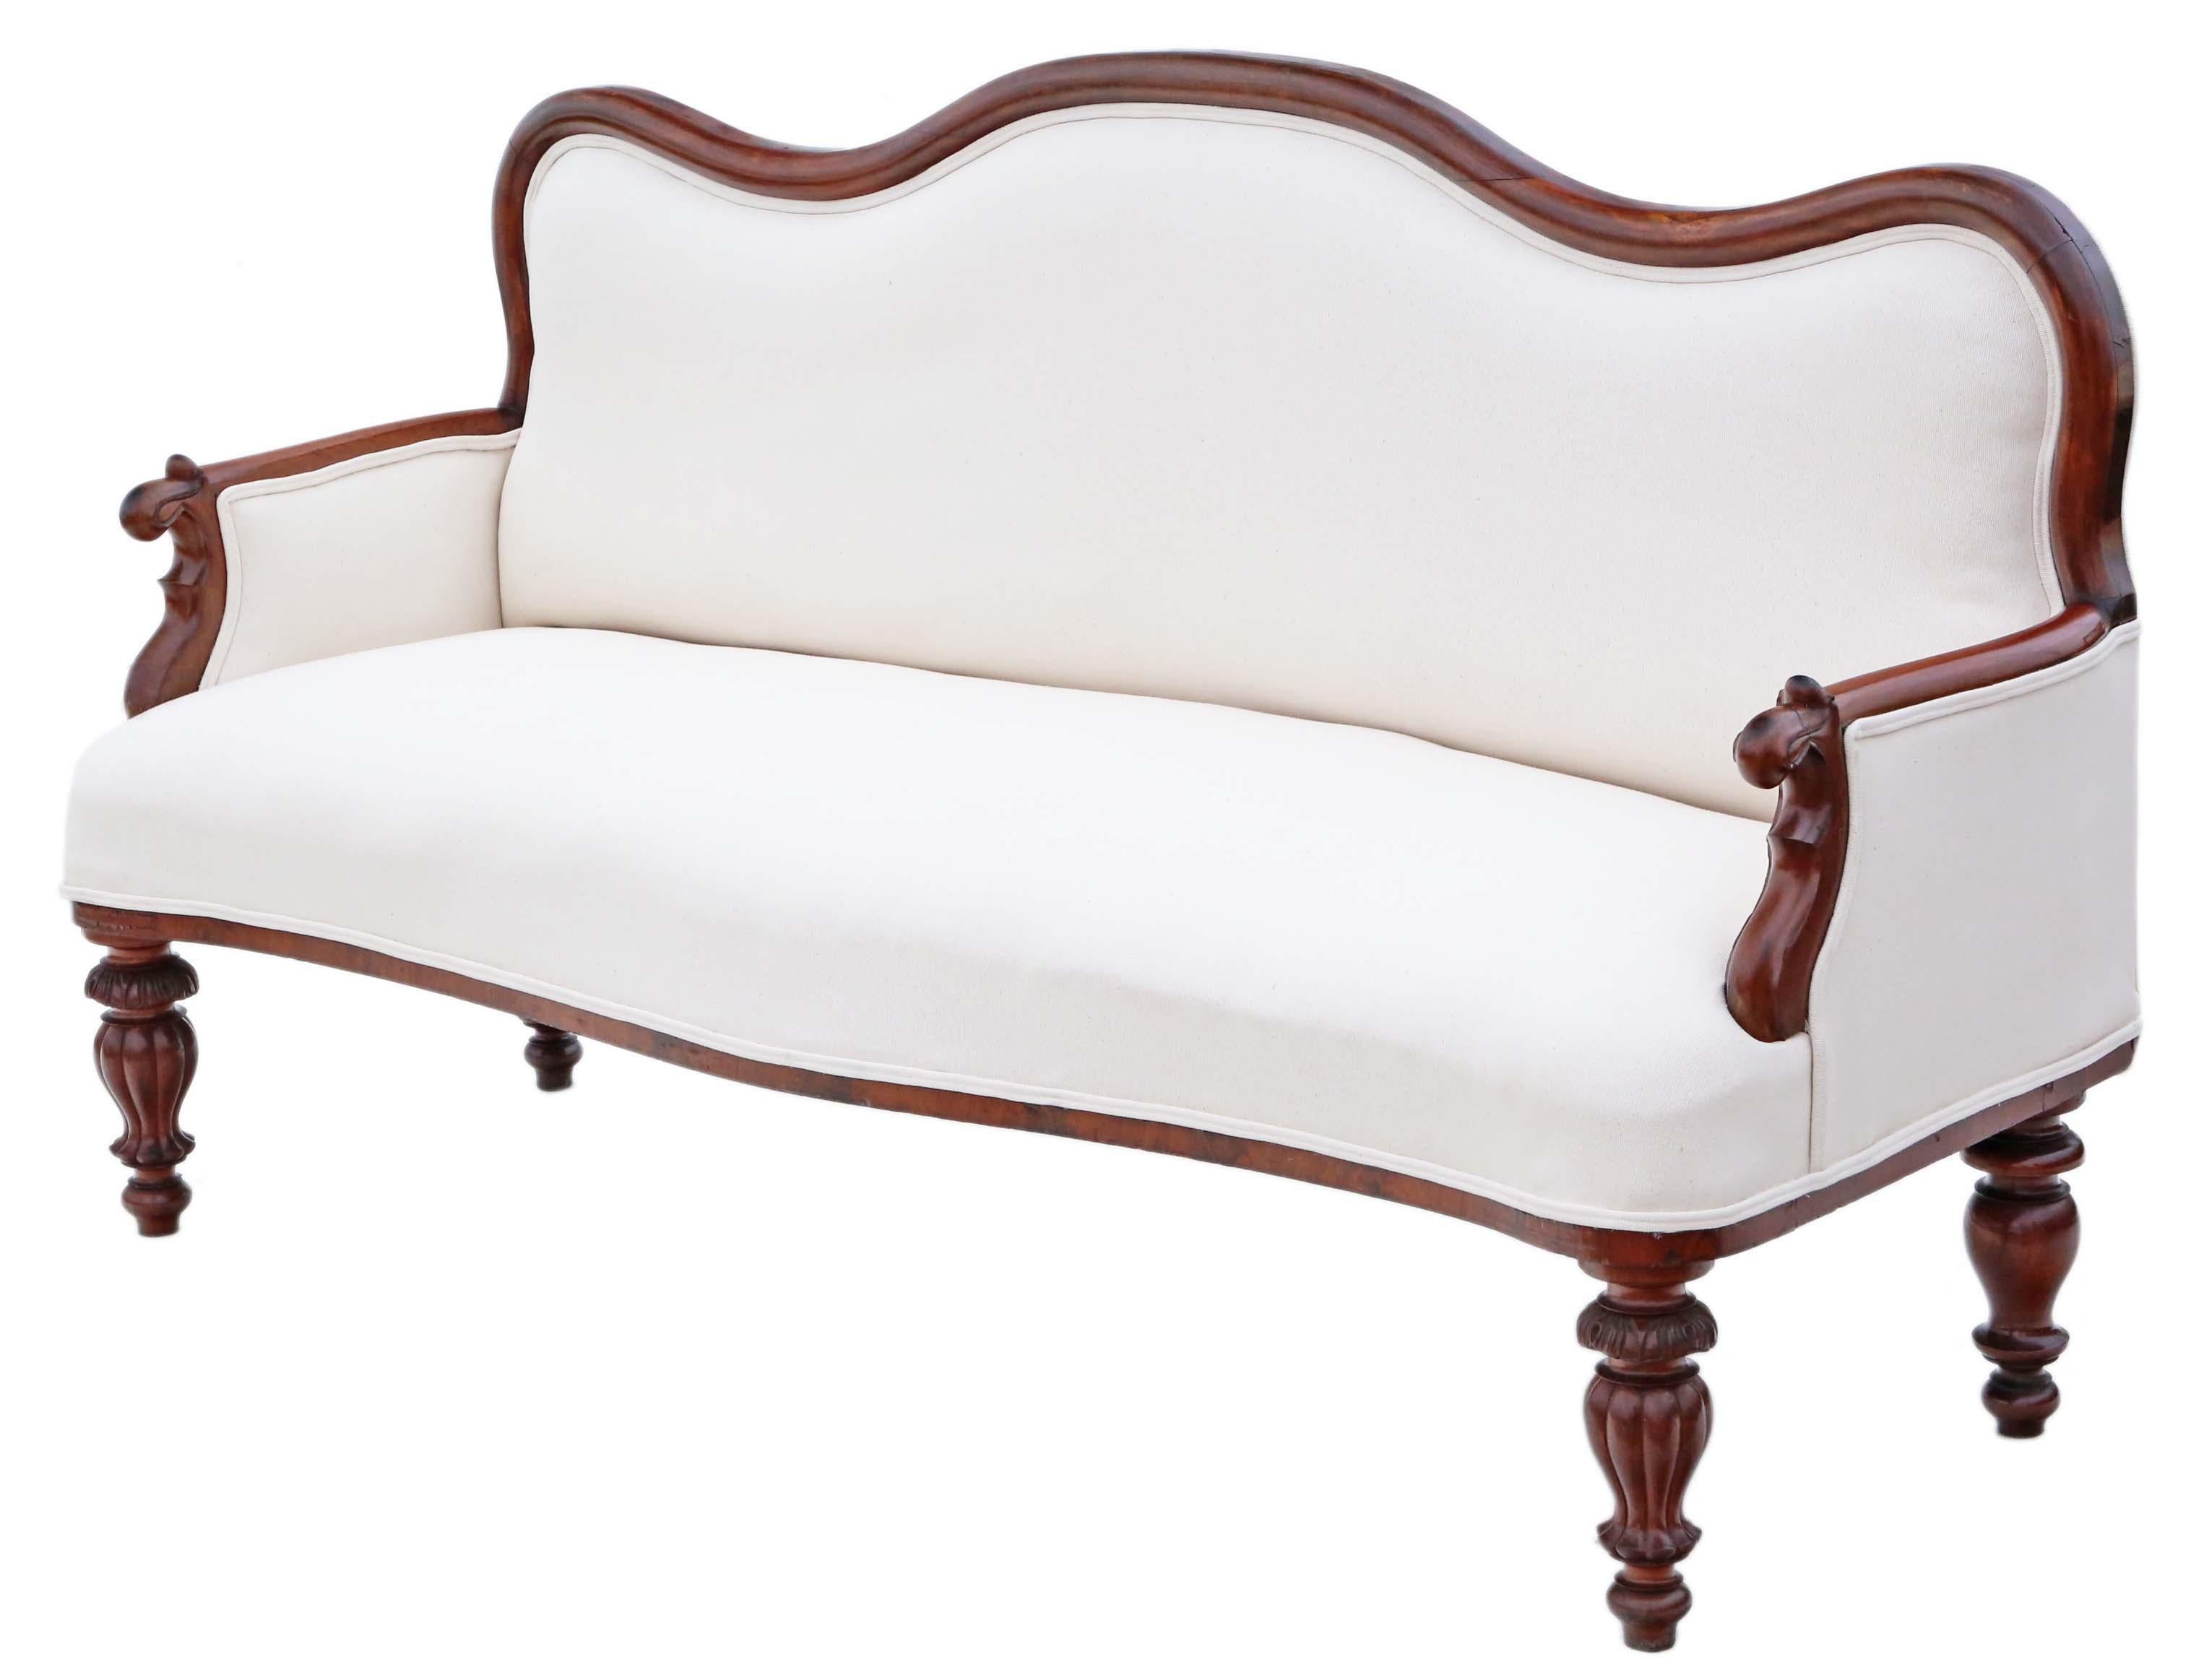 19th century furniture styles